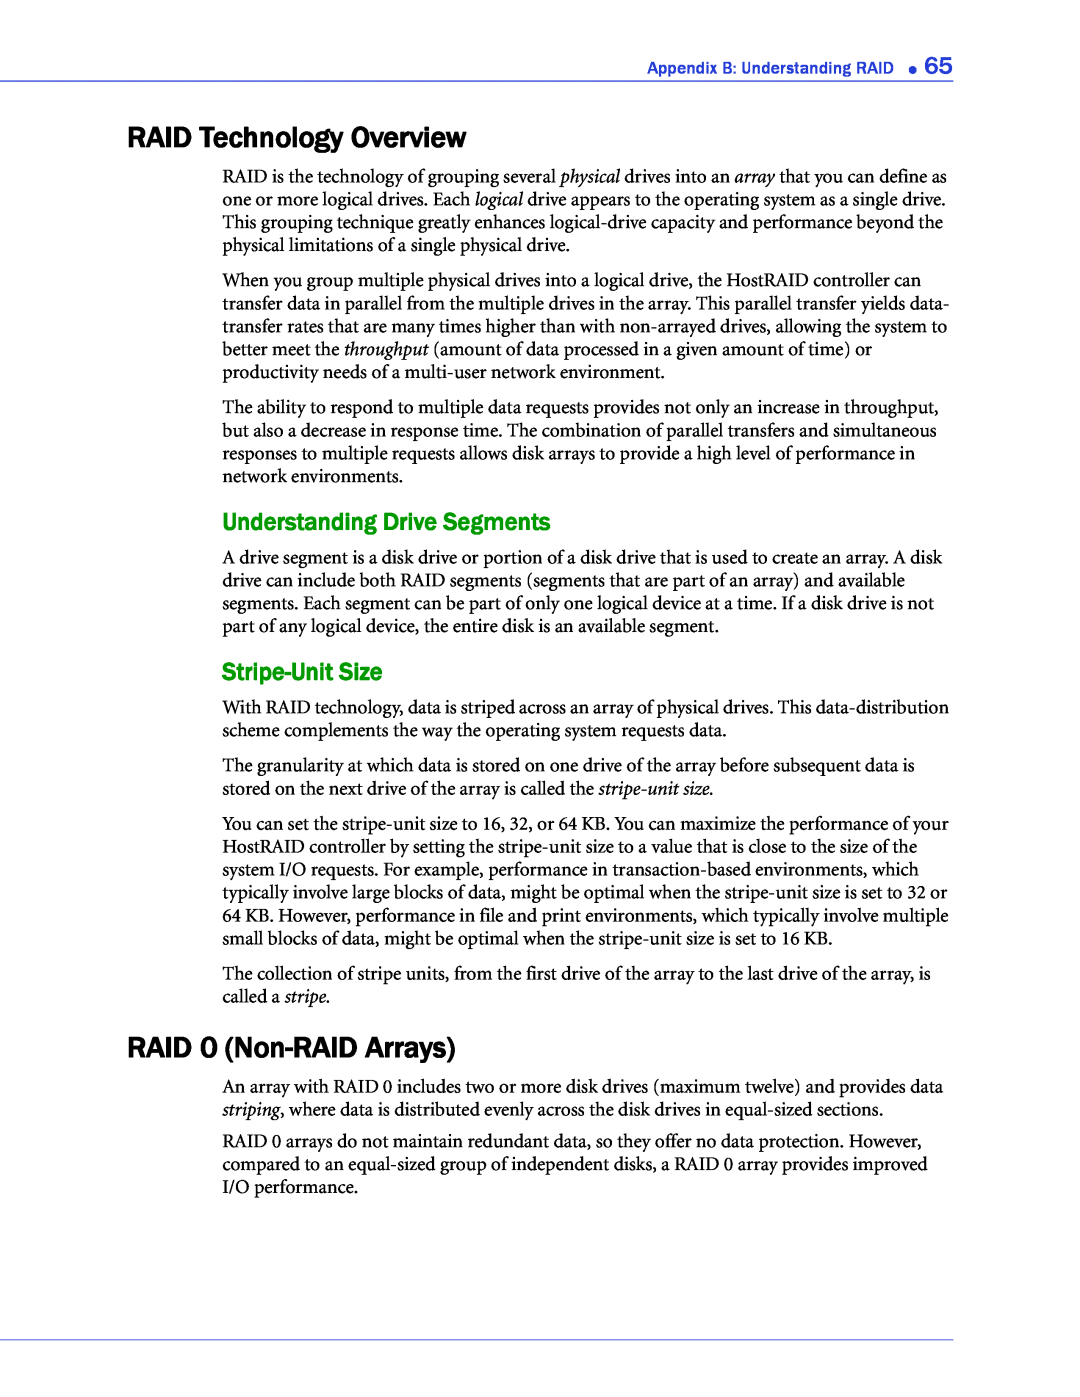 Adaptec 44300, 58300 manual RAID Technology Overview, RAID 0 Non-RAID Arrays, Understanding Drive Segments, Stripe-Unit Size 